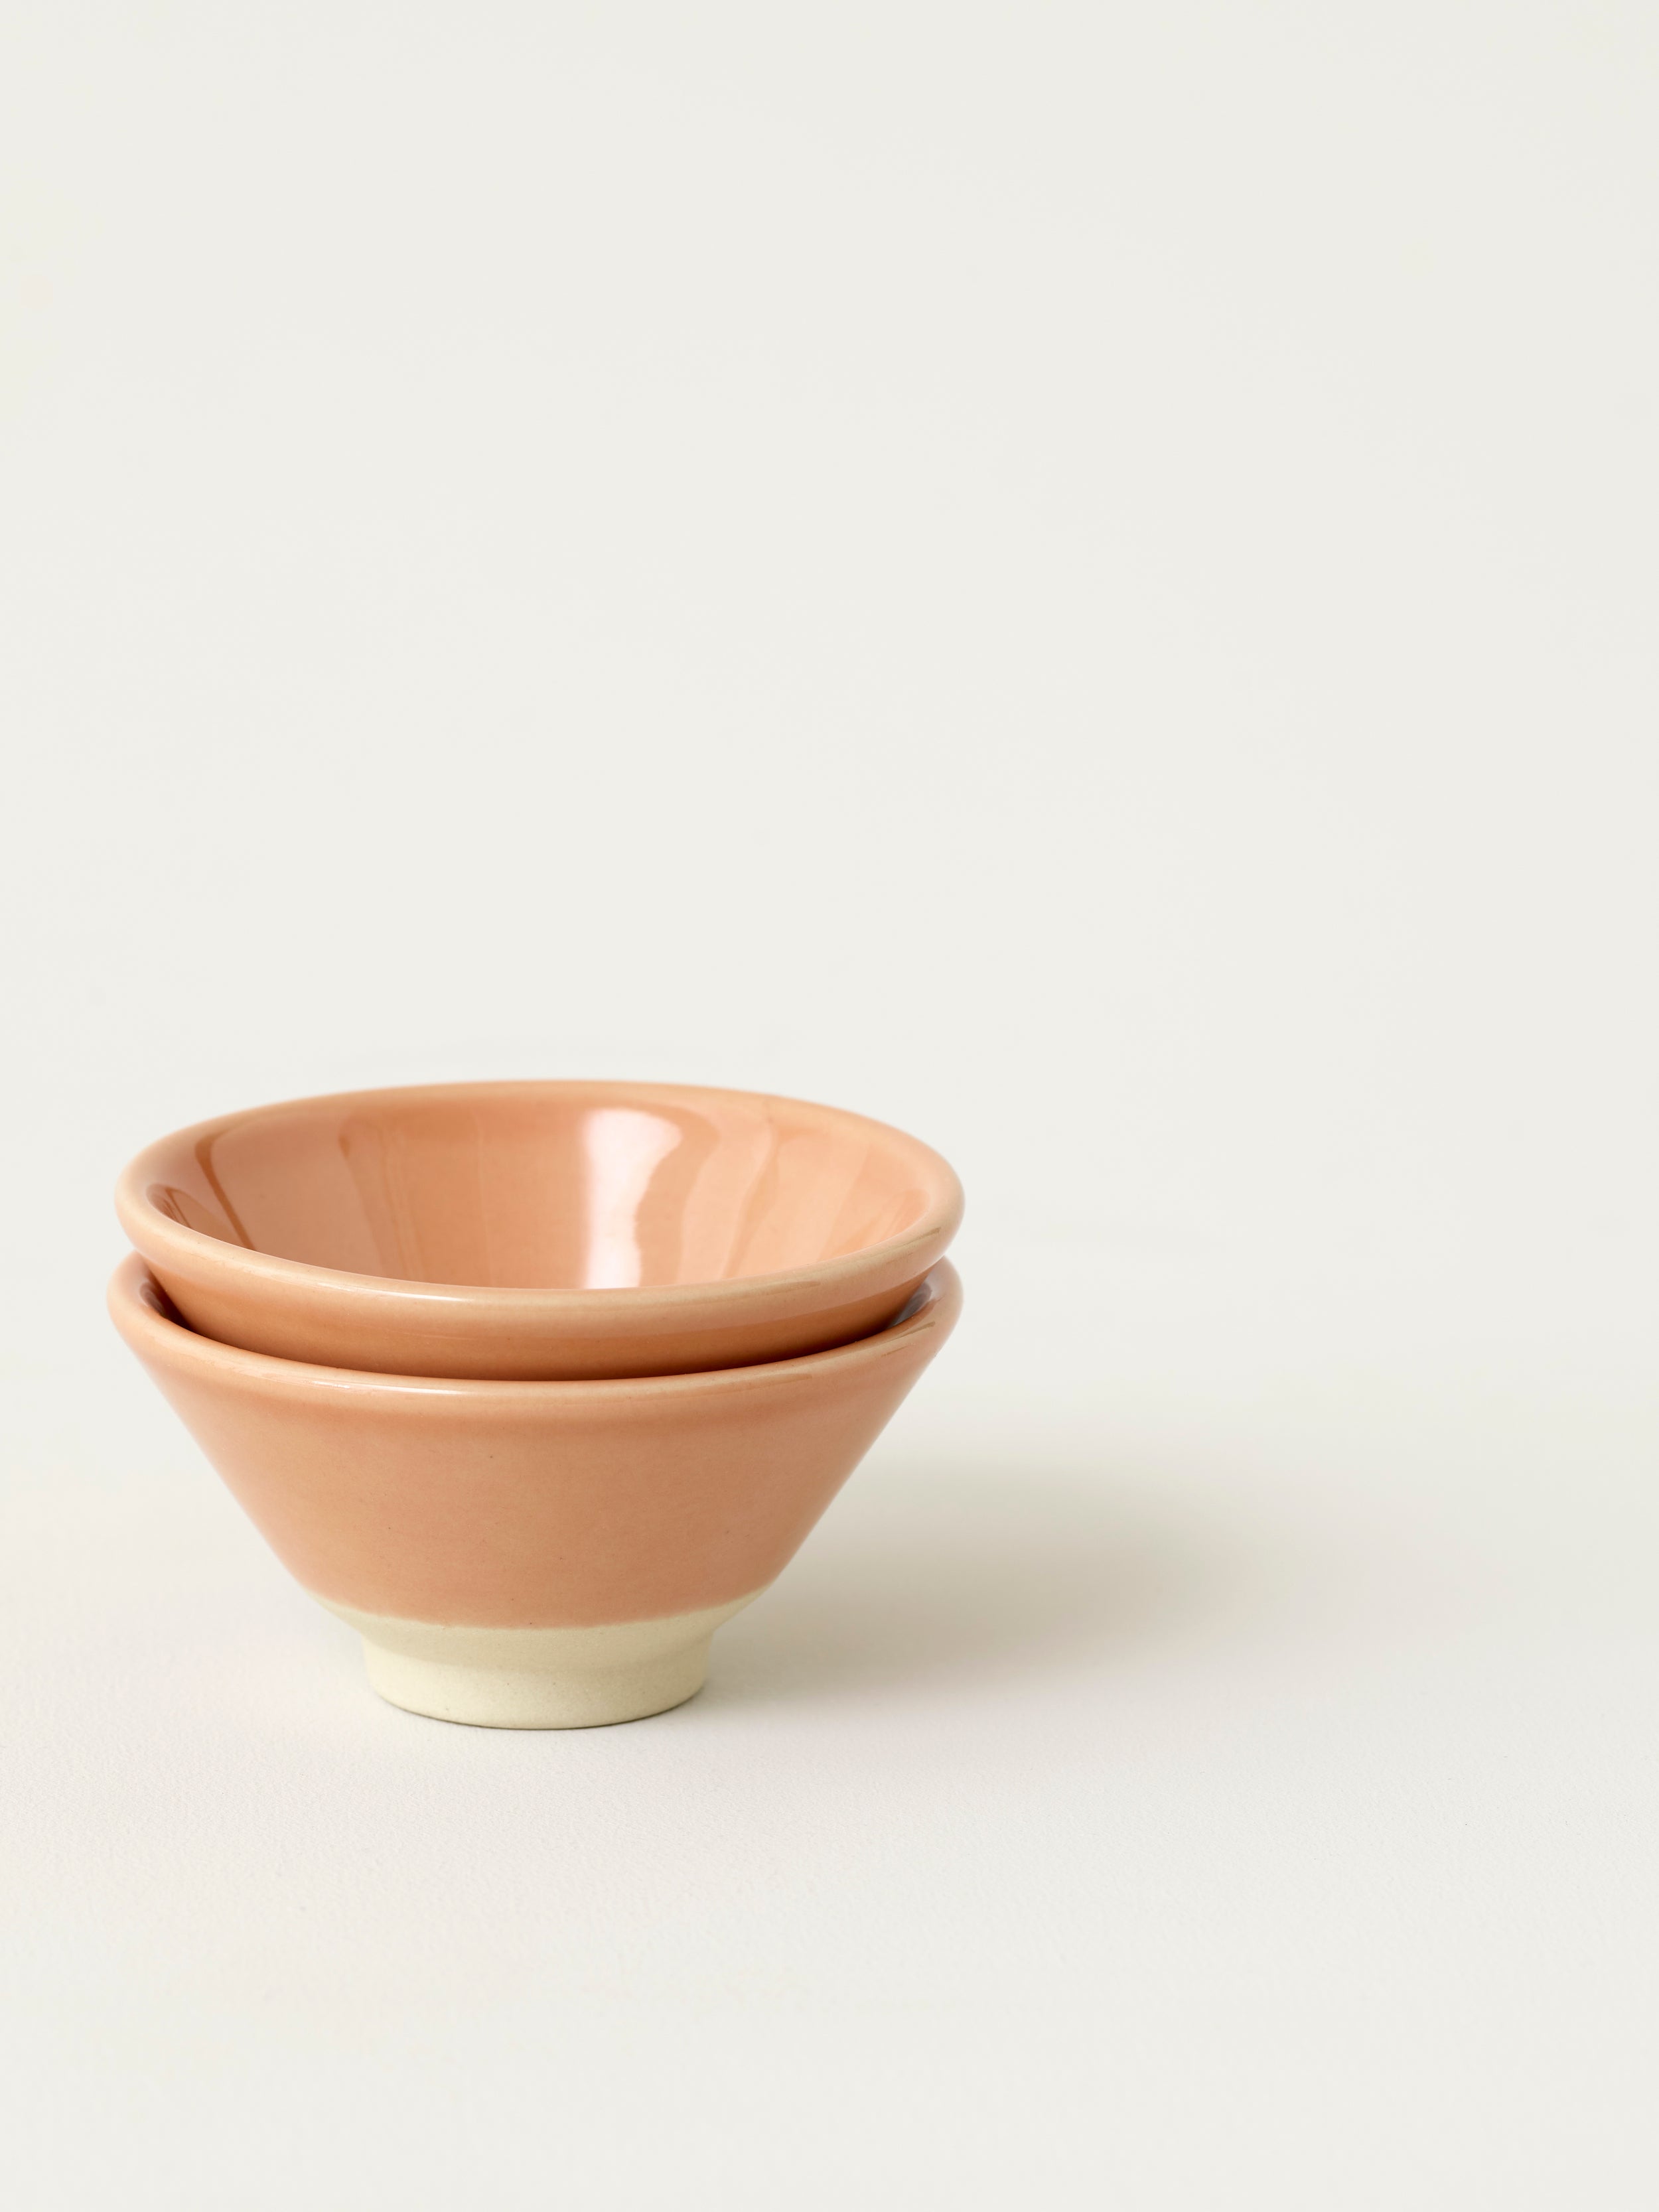 Stilleben memphis mini bowl terracotta